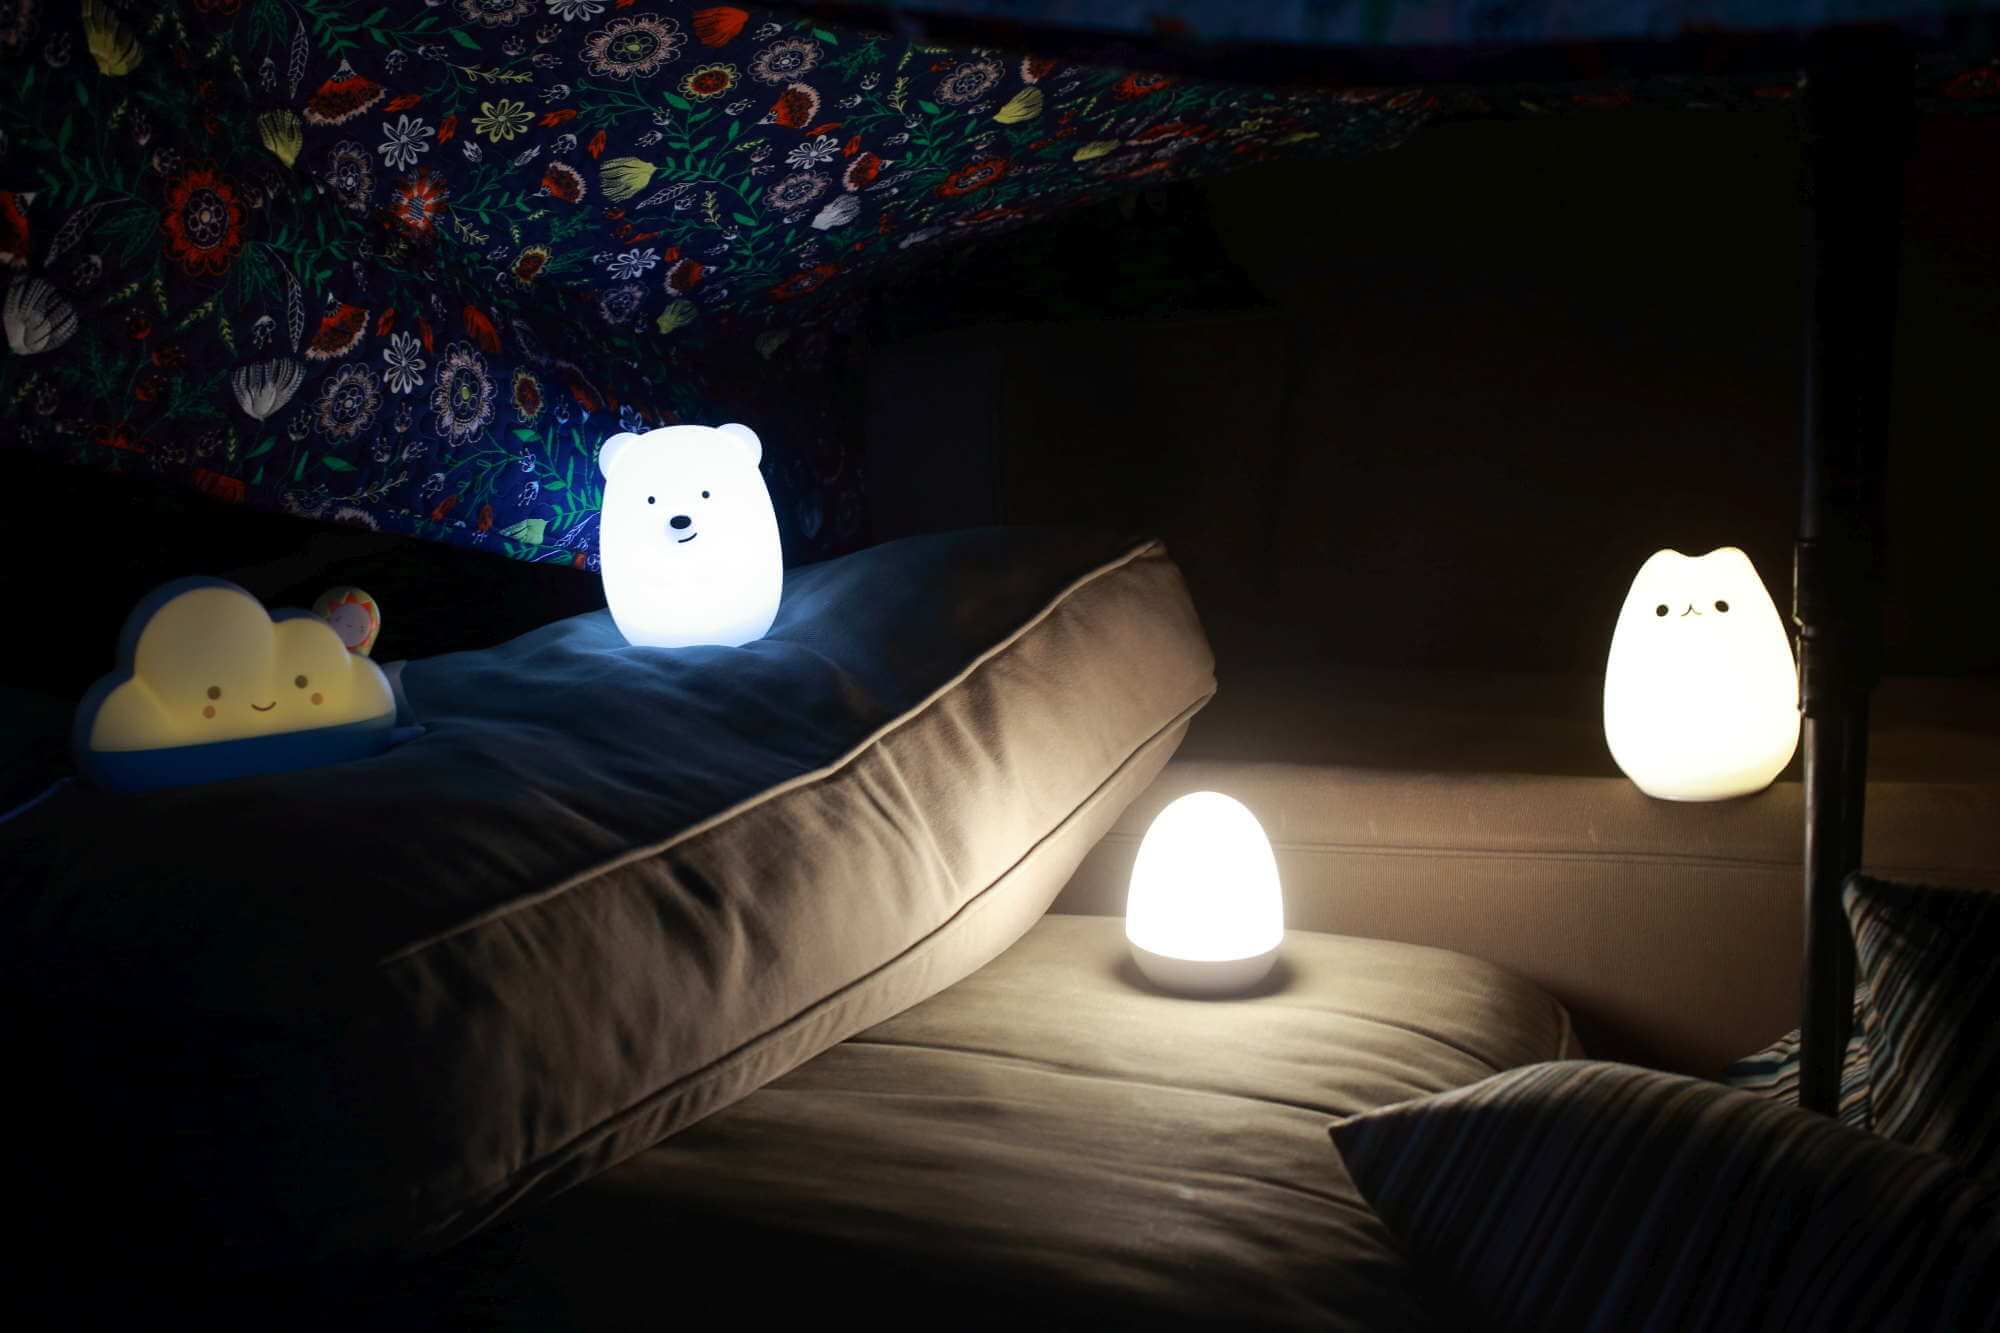 2 Pack Plug-in LED Night Light Hallway Bedroom with Auto Light Sensor Control